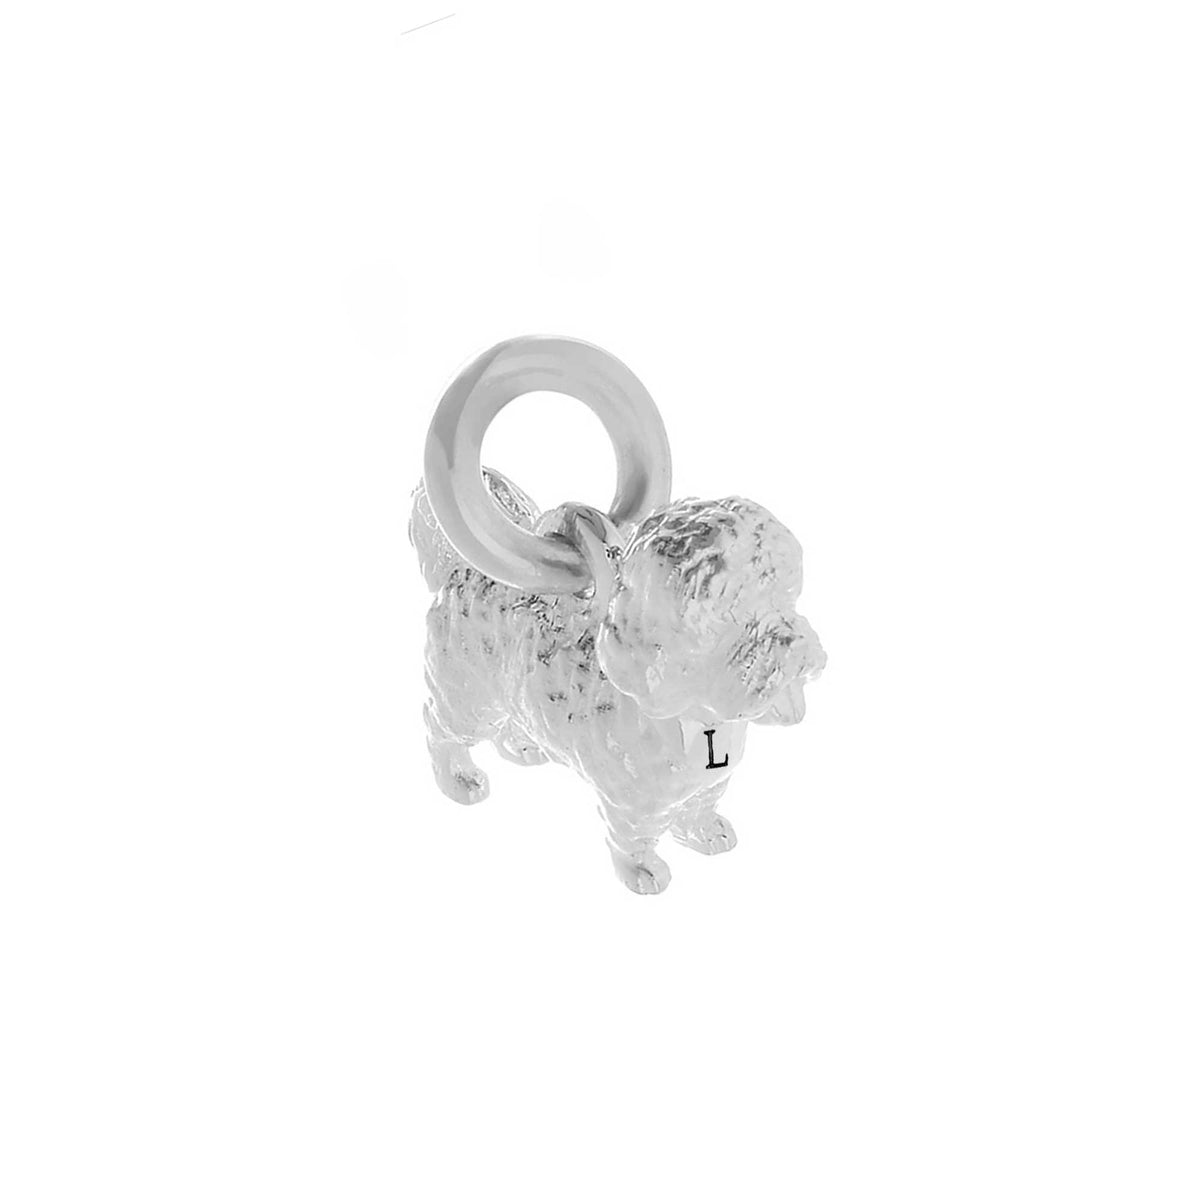 Maltipoo mixed breed sterling silver dog charm for bracelet Scarlett Jewellery Ltd